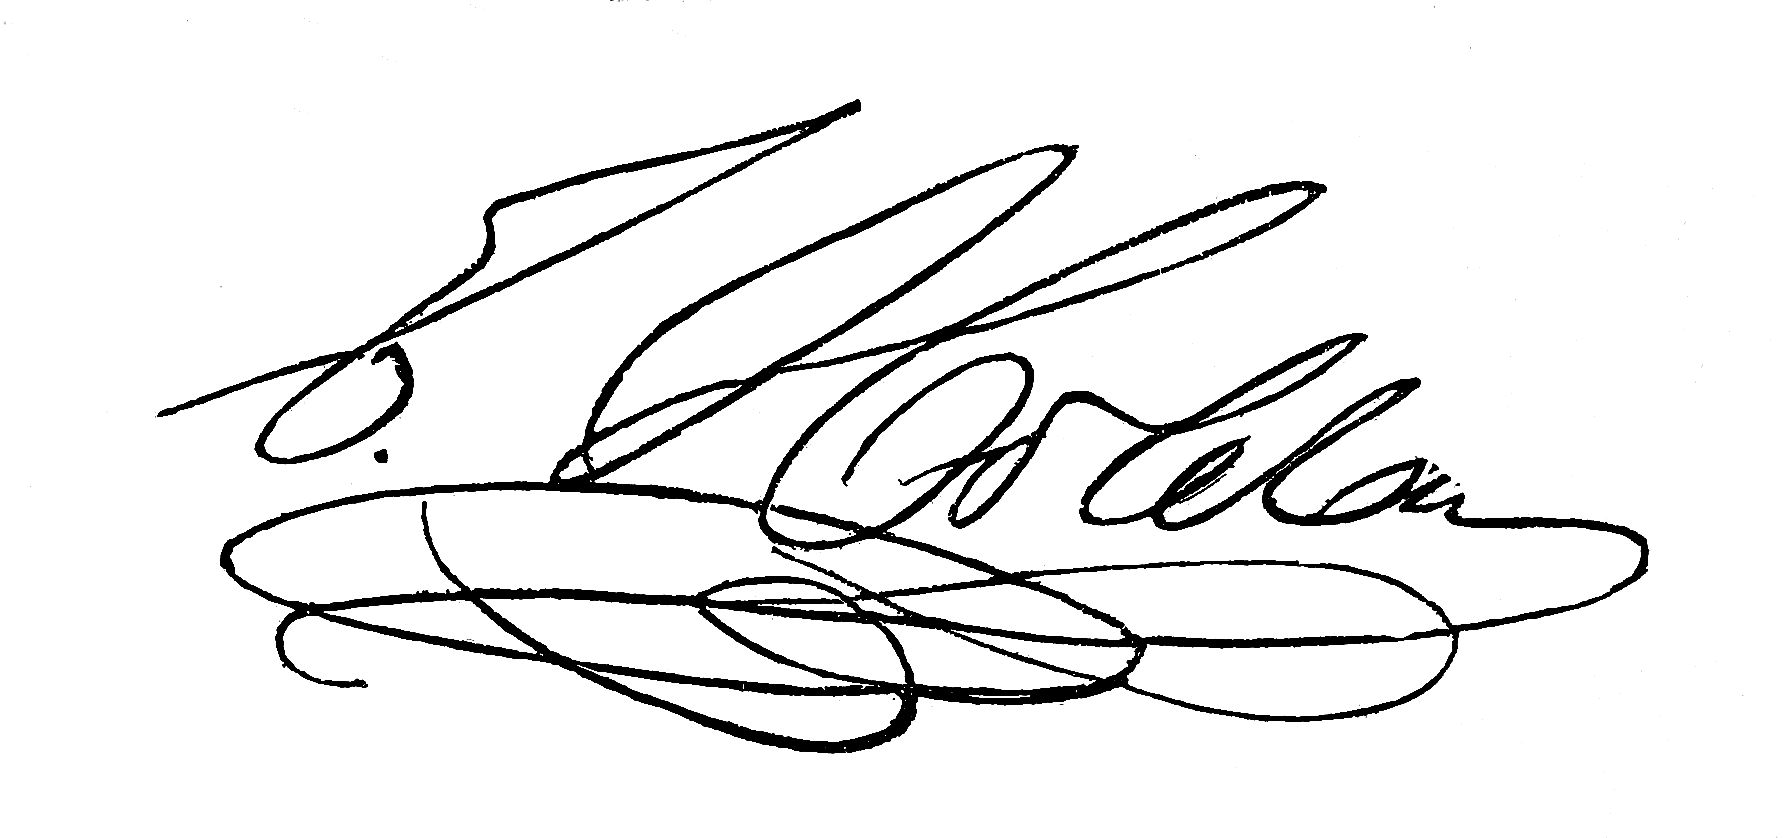 Signature of E. Holden